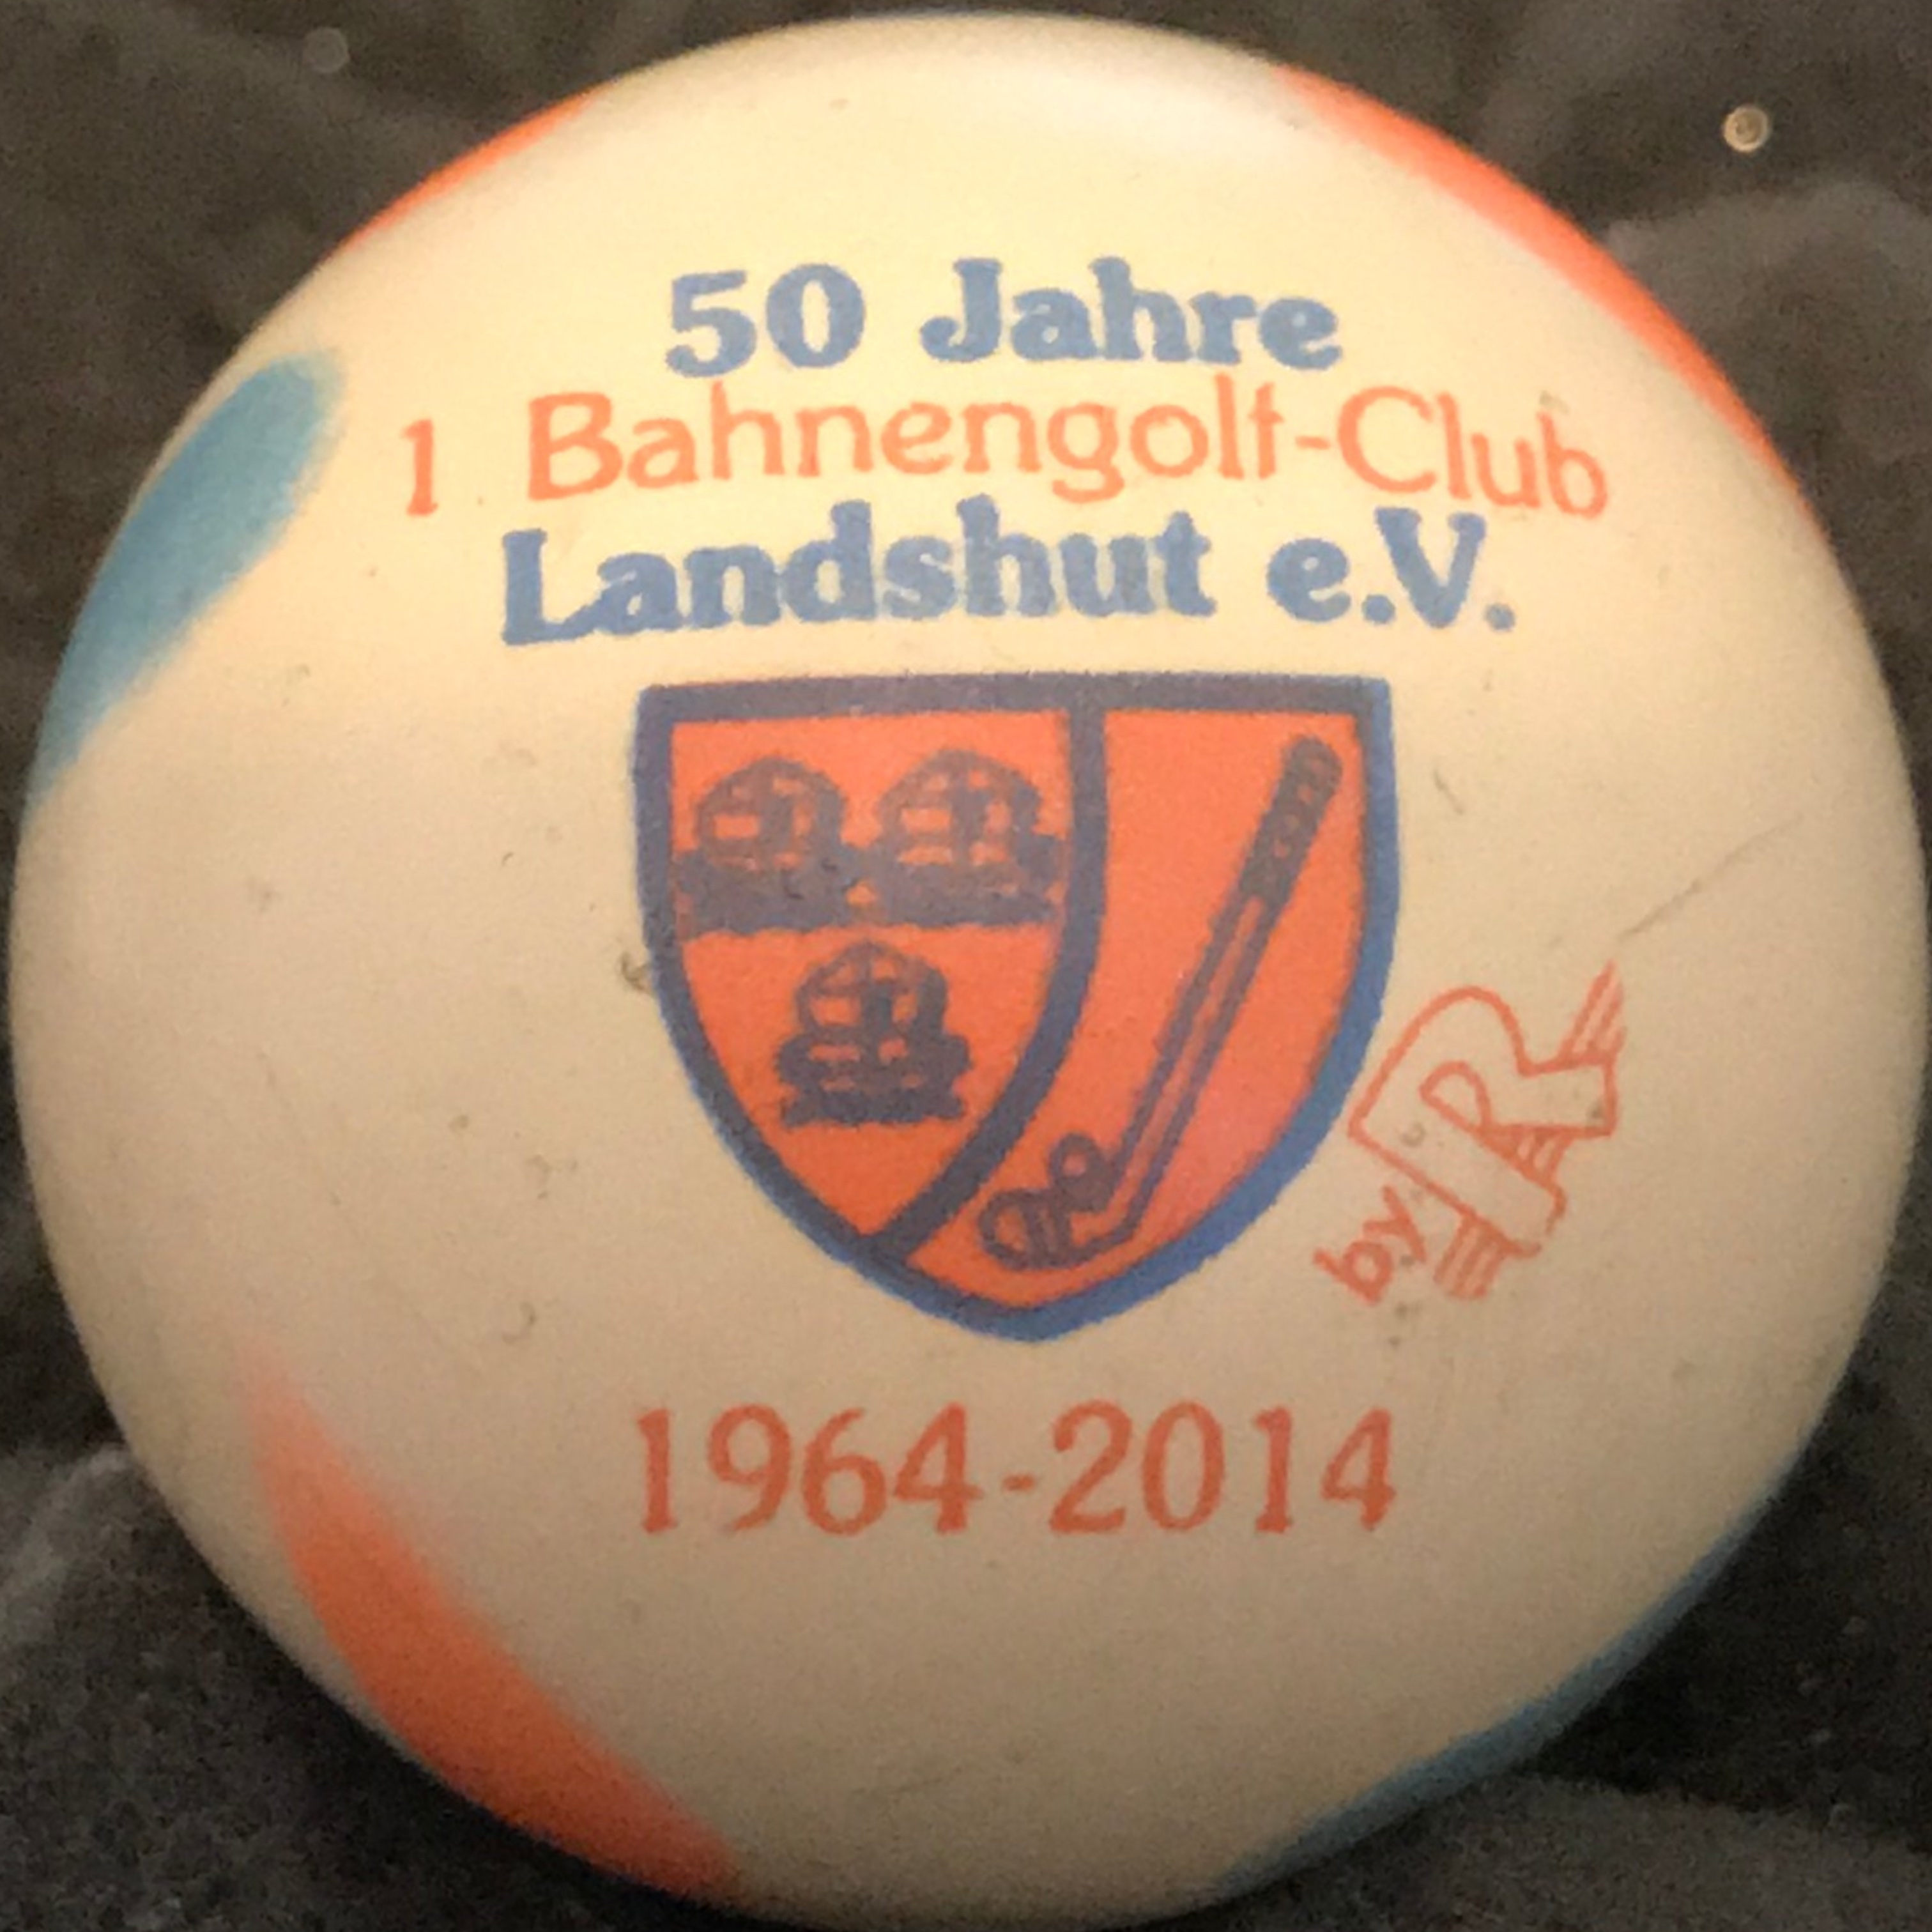 50_jahre_1_bahnengolf-club_landshut_e.v._1964-2014.jpg